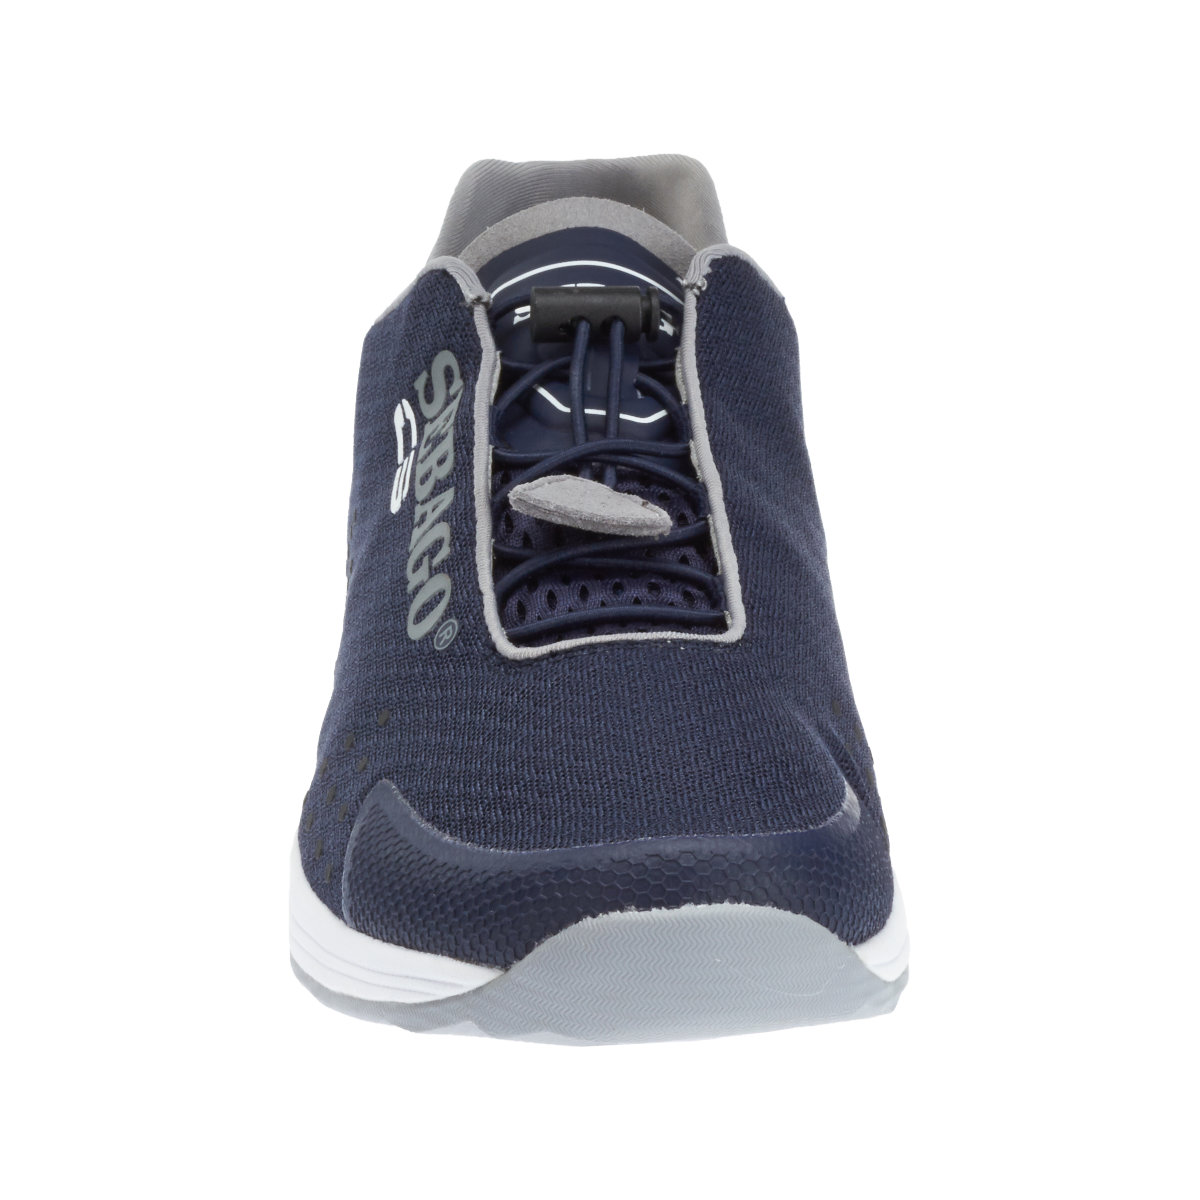 Sebago Cyphon Sea Sport chaussures à voile homme navy, taille EU 44,5 (US 10,5)